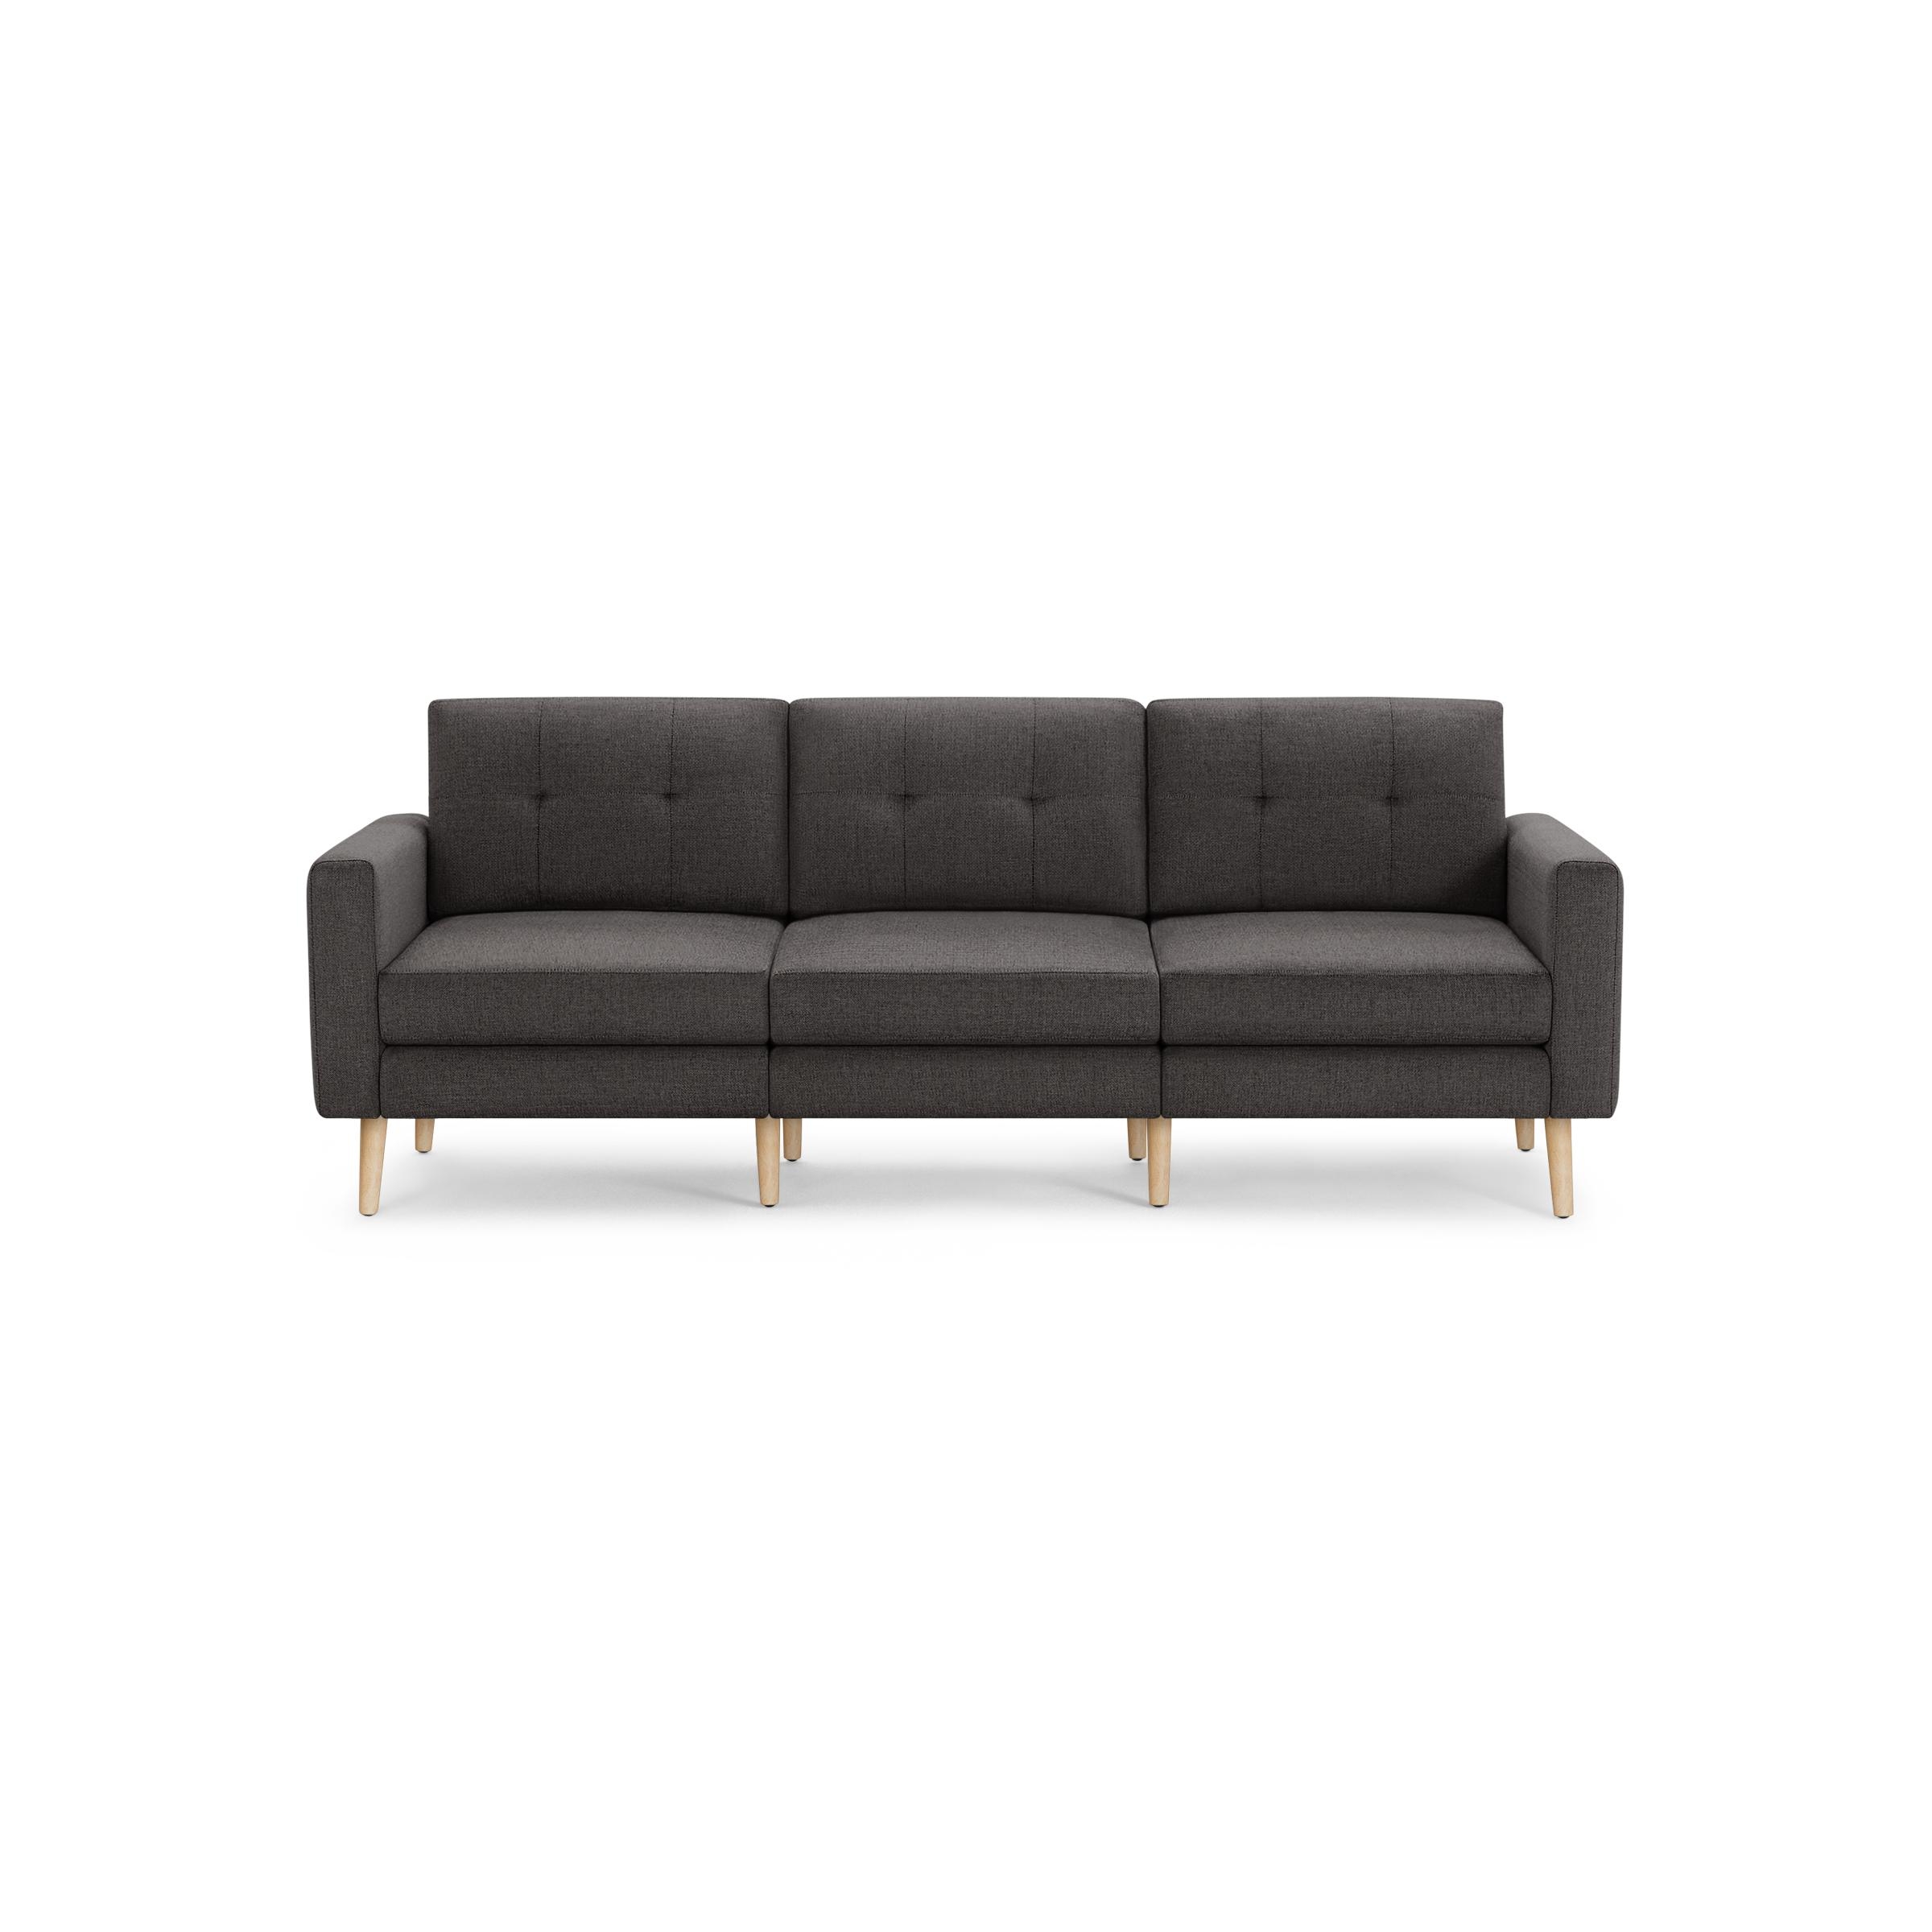 Nomad Sofa in Charcoal, Oak Legs, Leg Finish: OakLegs - Image 0